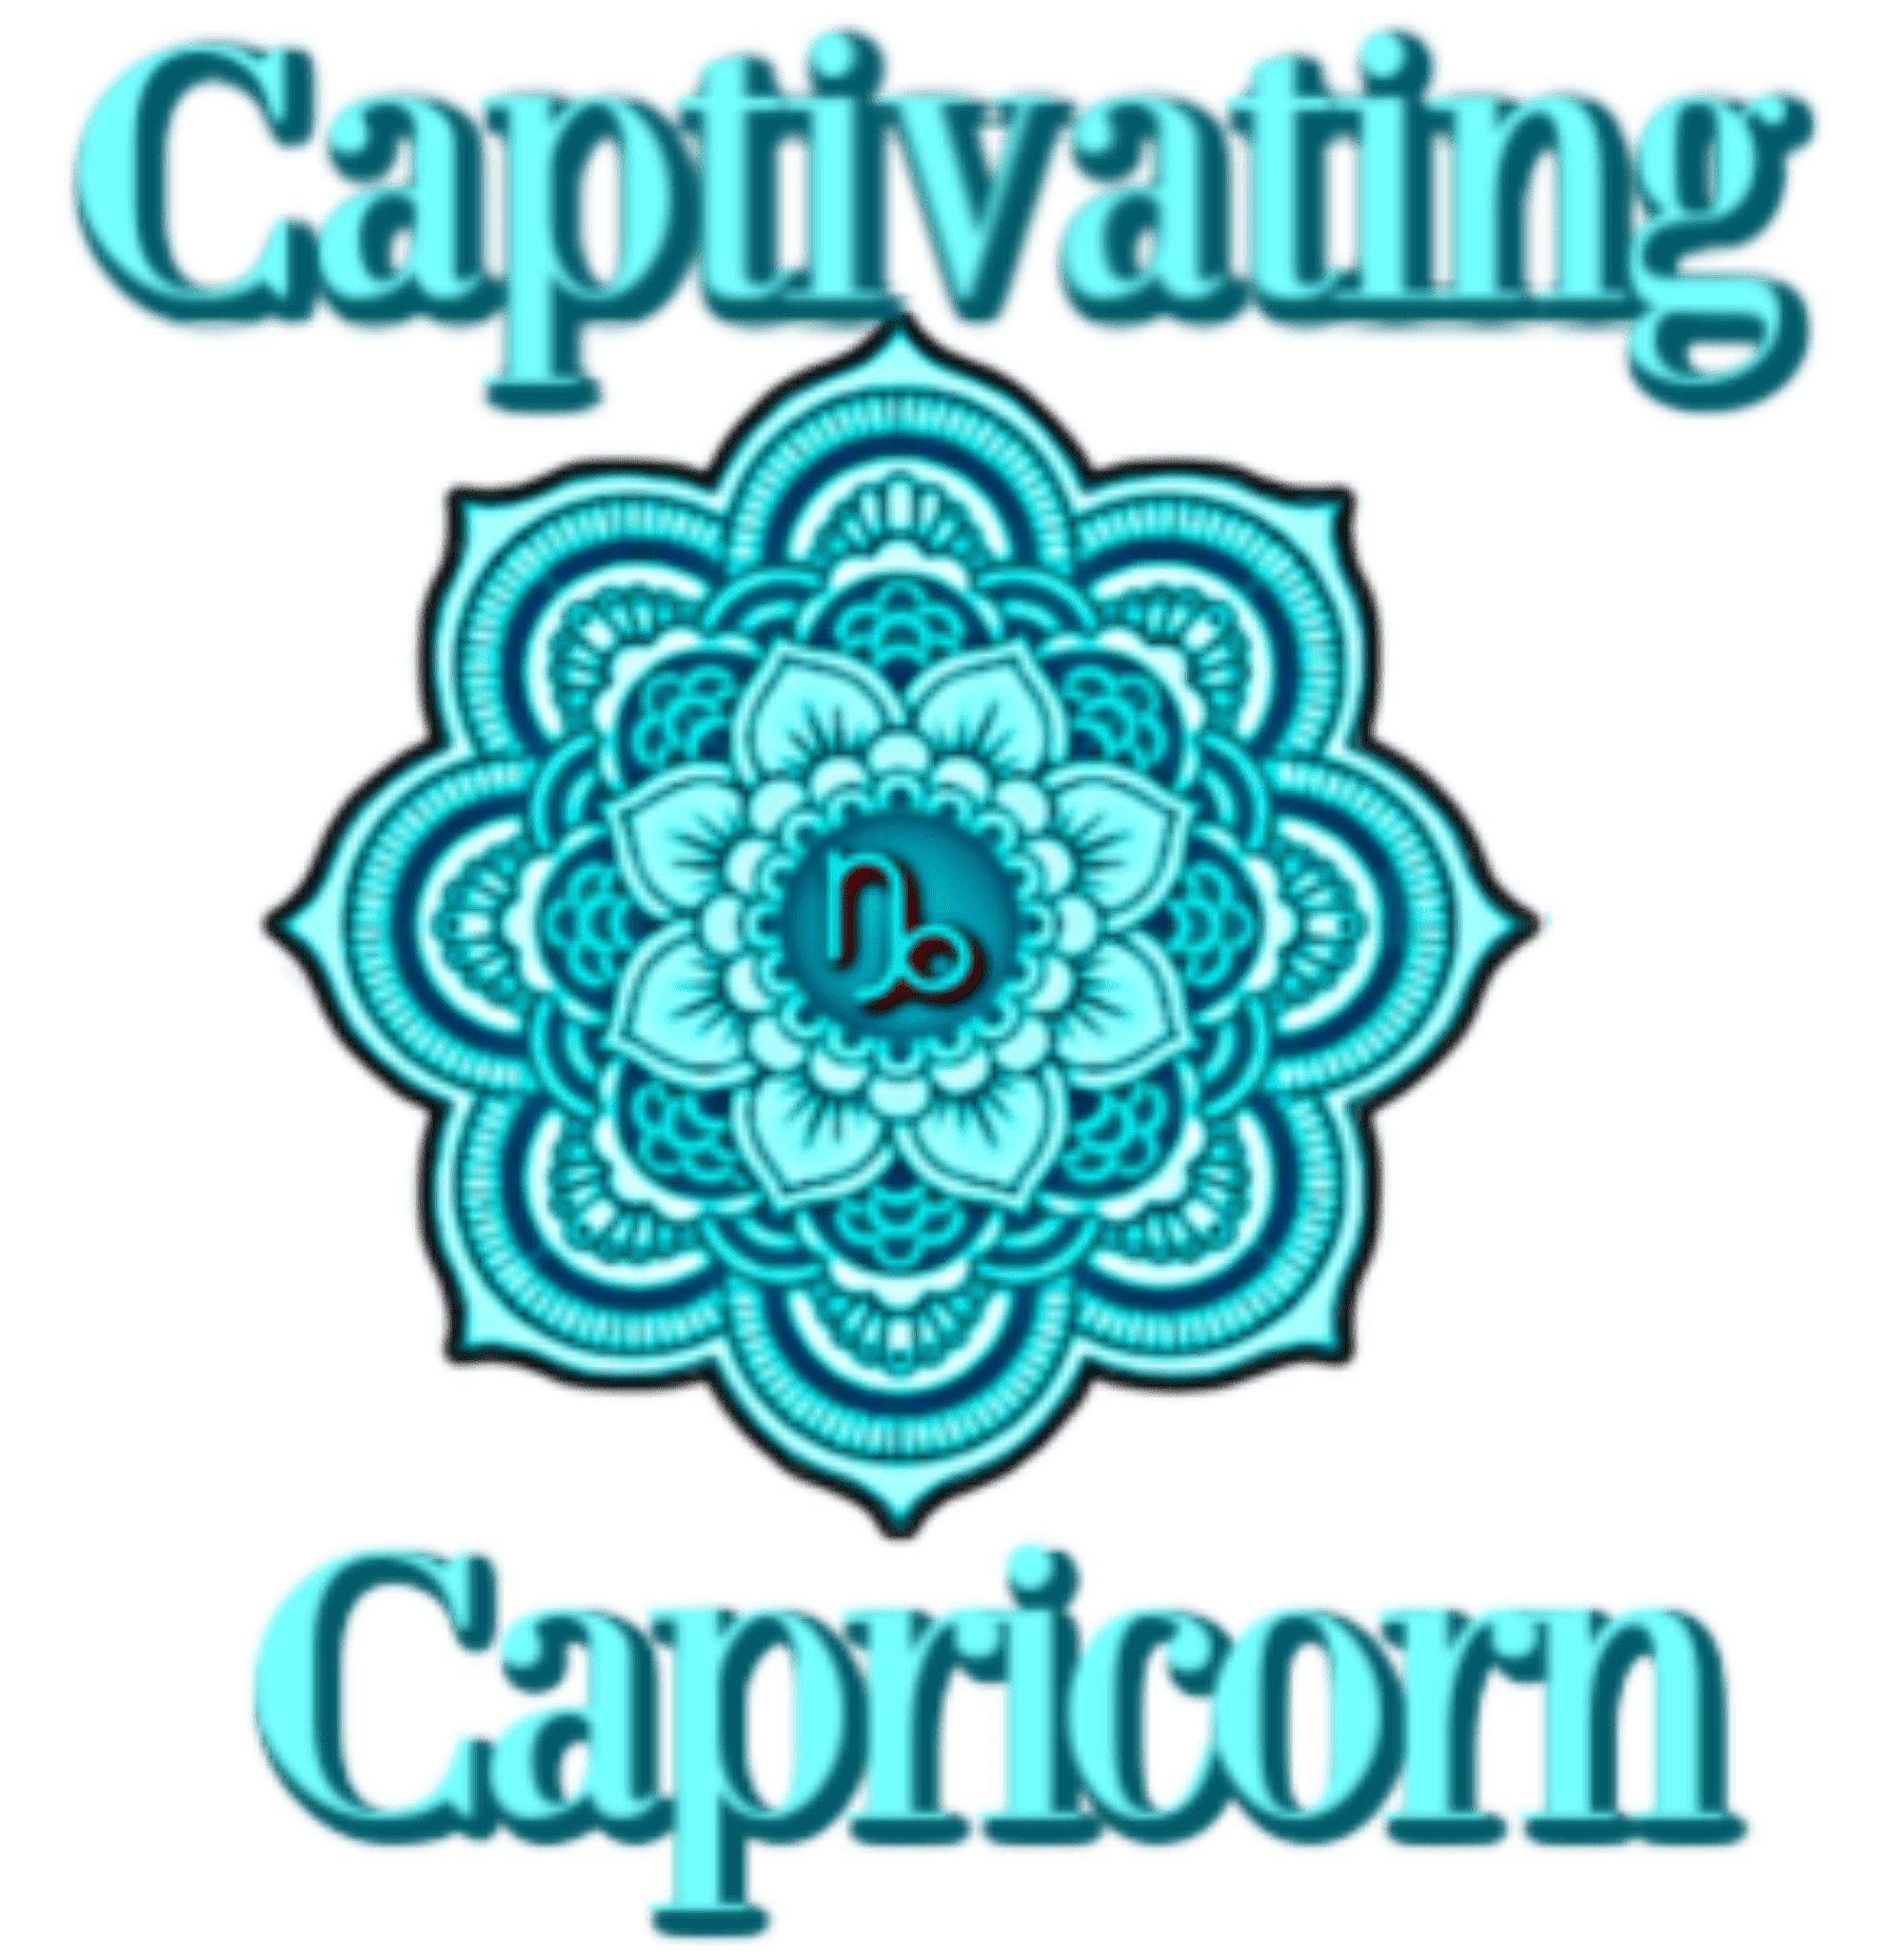 Captivating Capricorn Jewelry